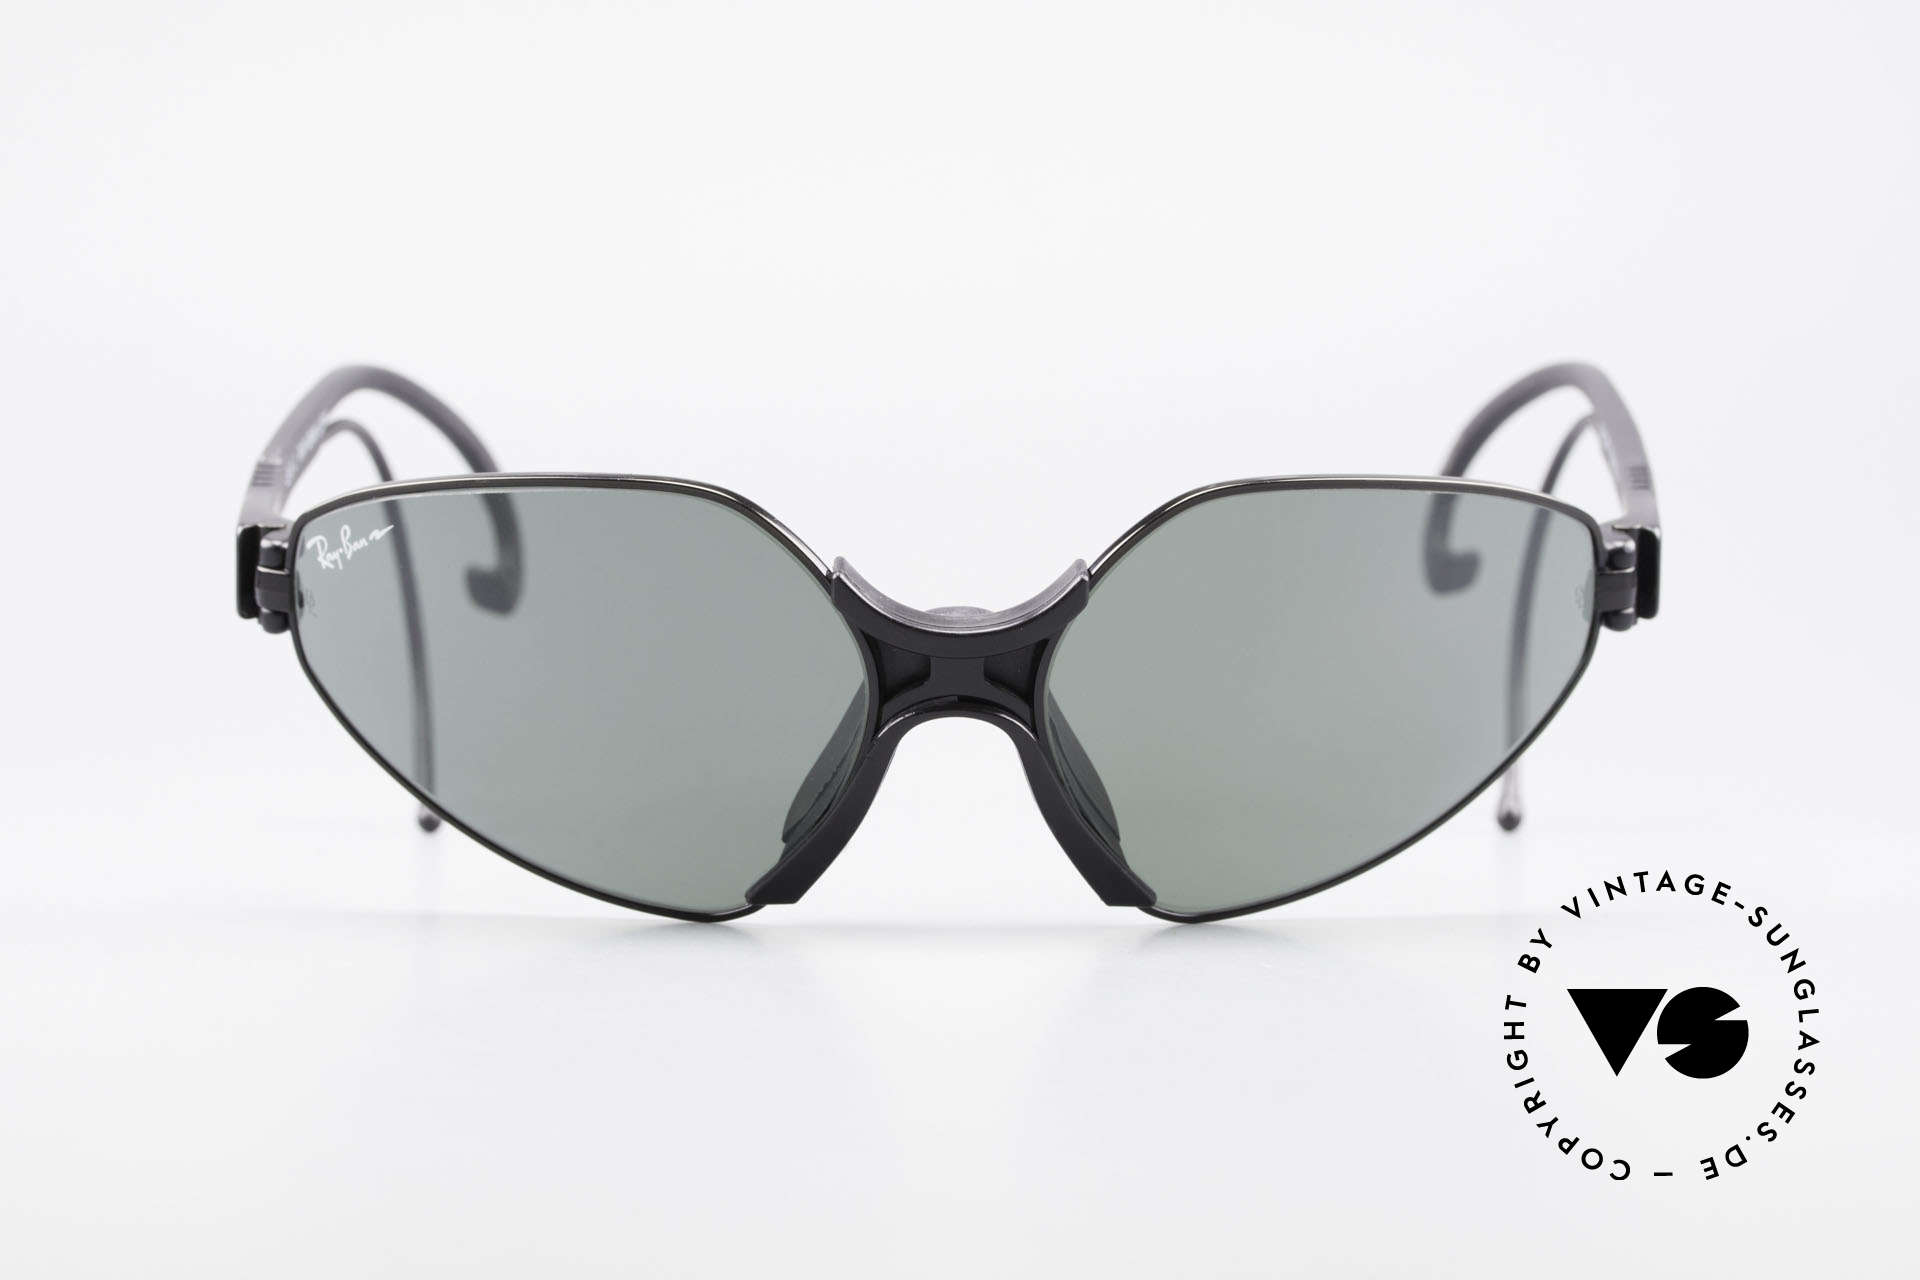 Sunglasses Ray Ban Sport Series 1 G20 